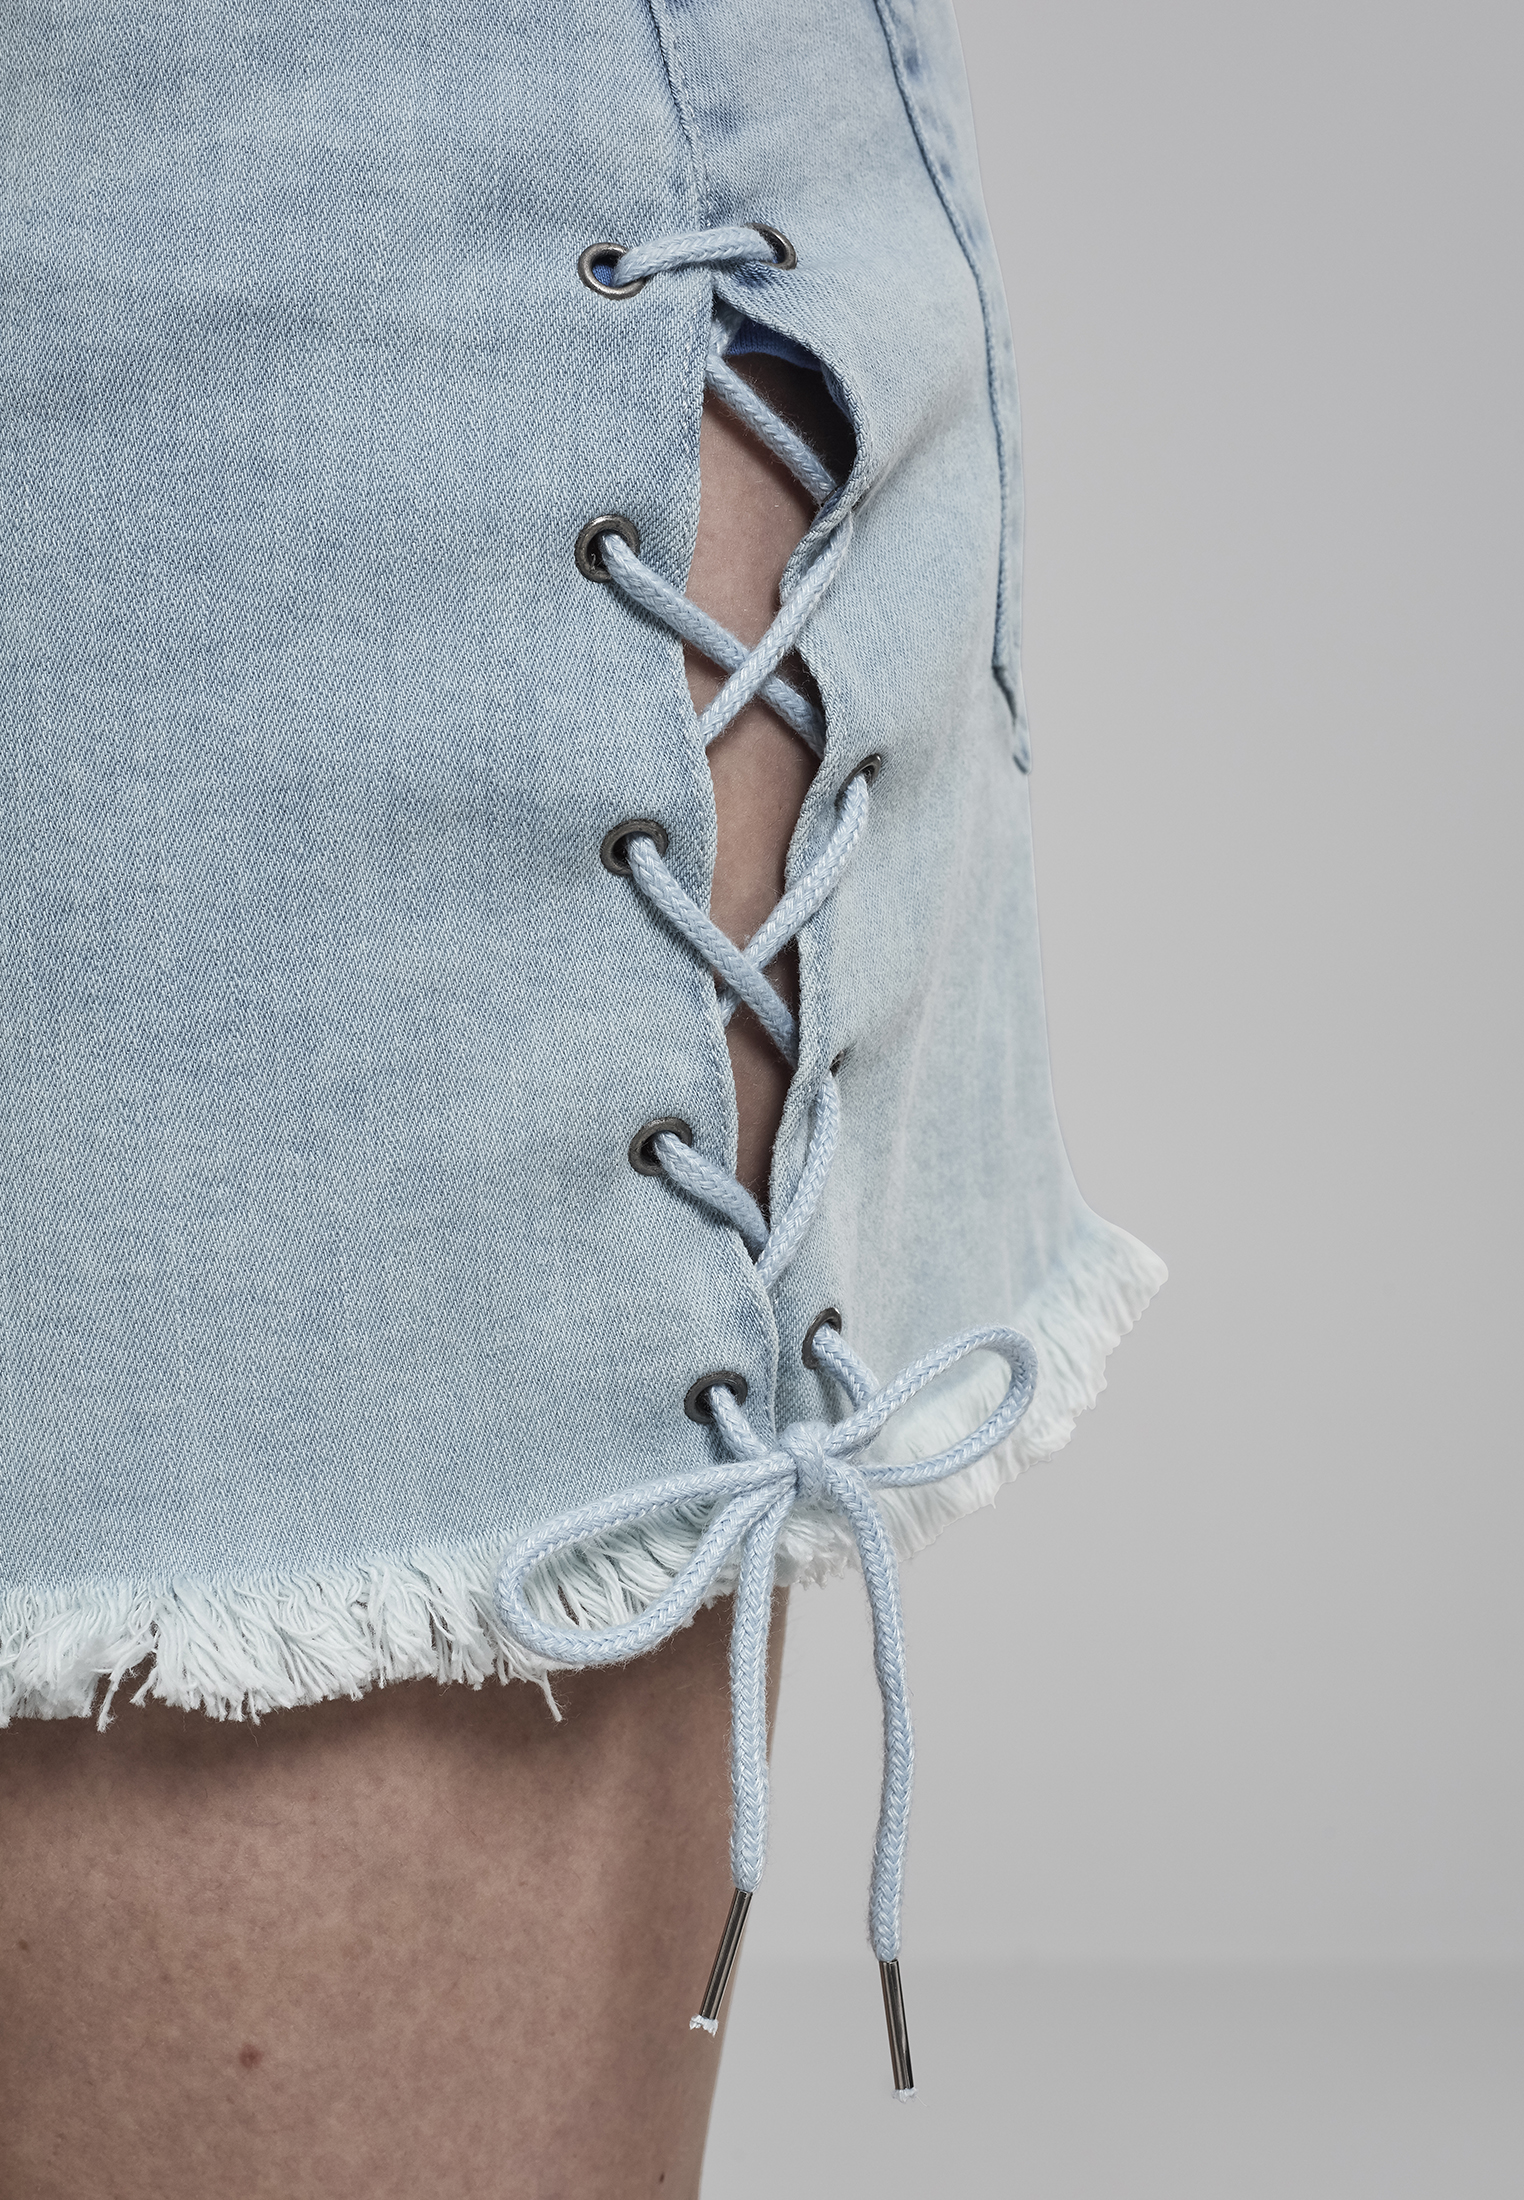 Kleider & R?cke Ladies Denim Lace Up Skirt in Farbe blue bleached